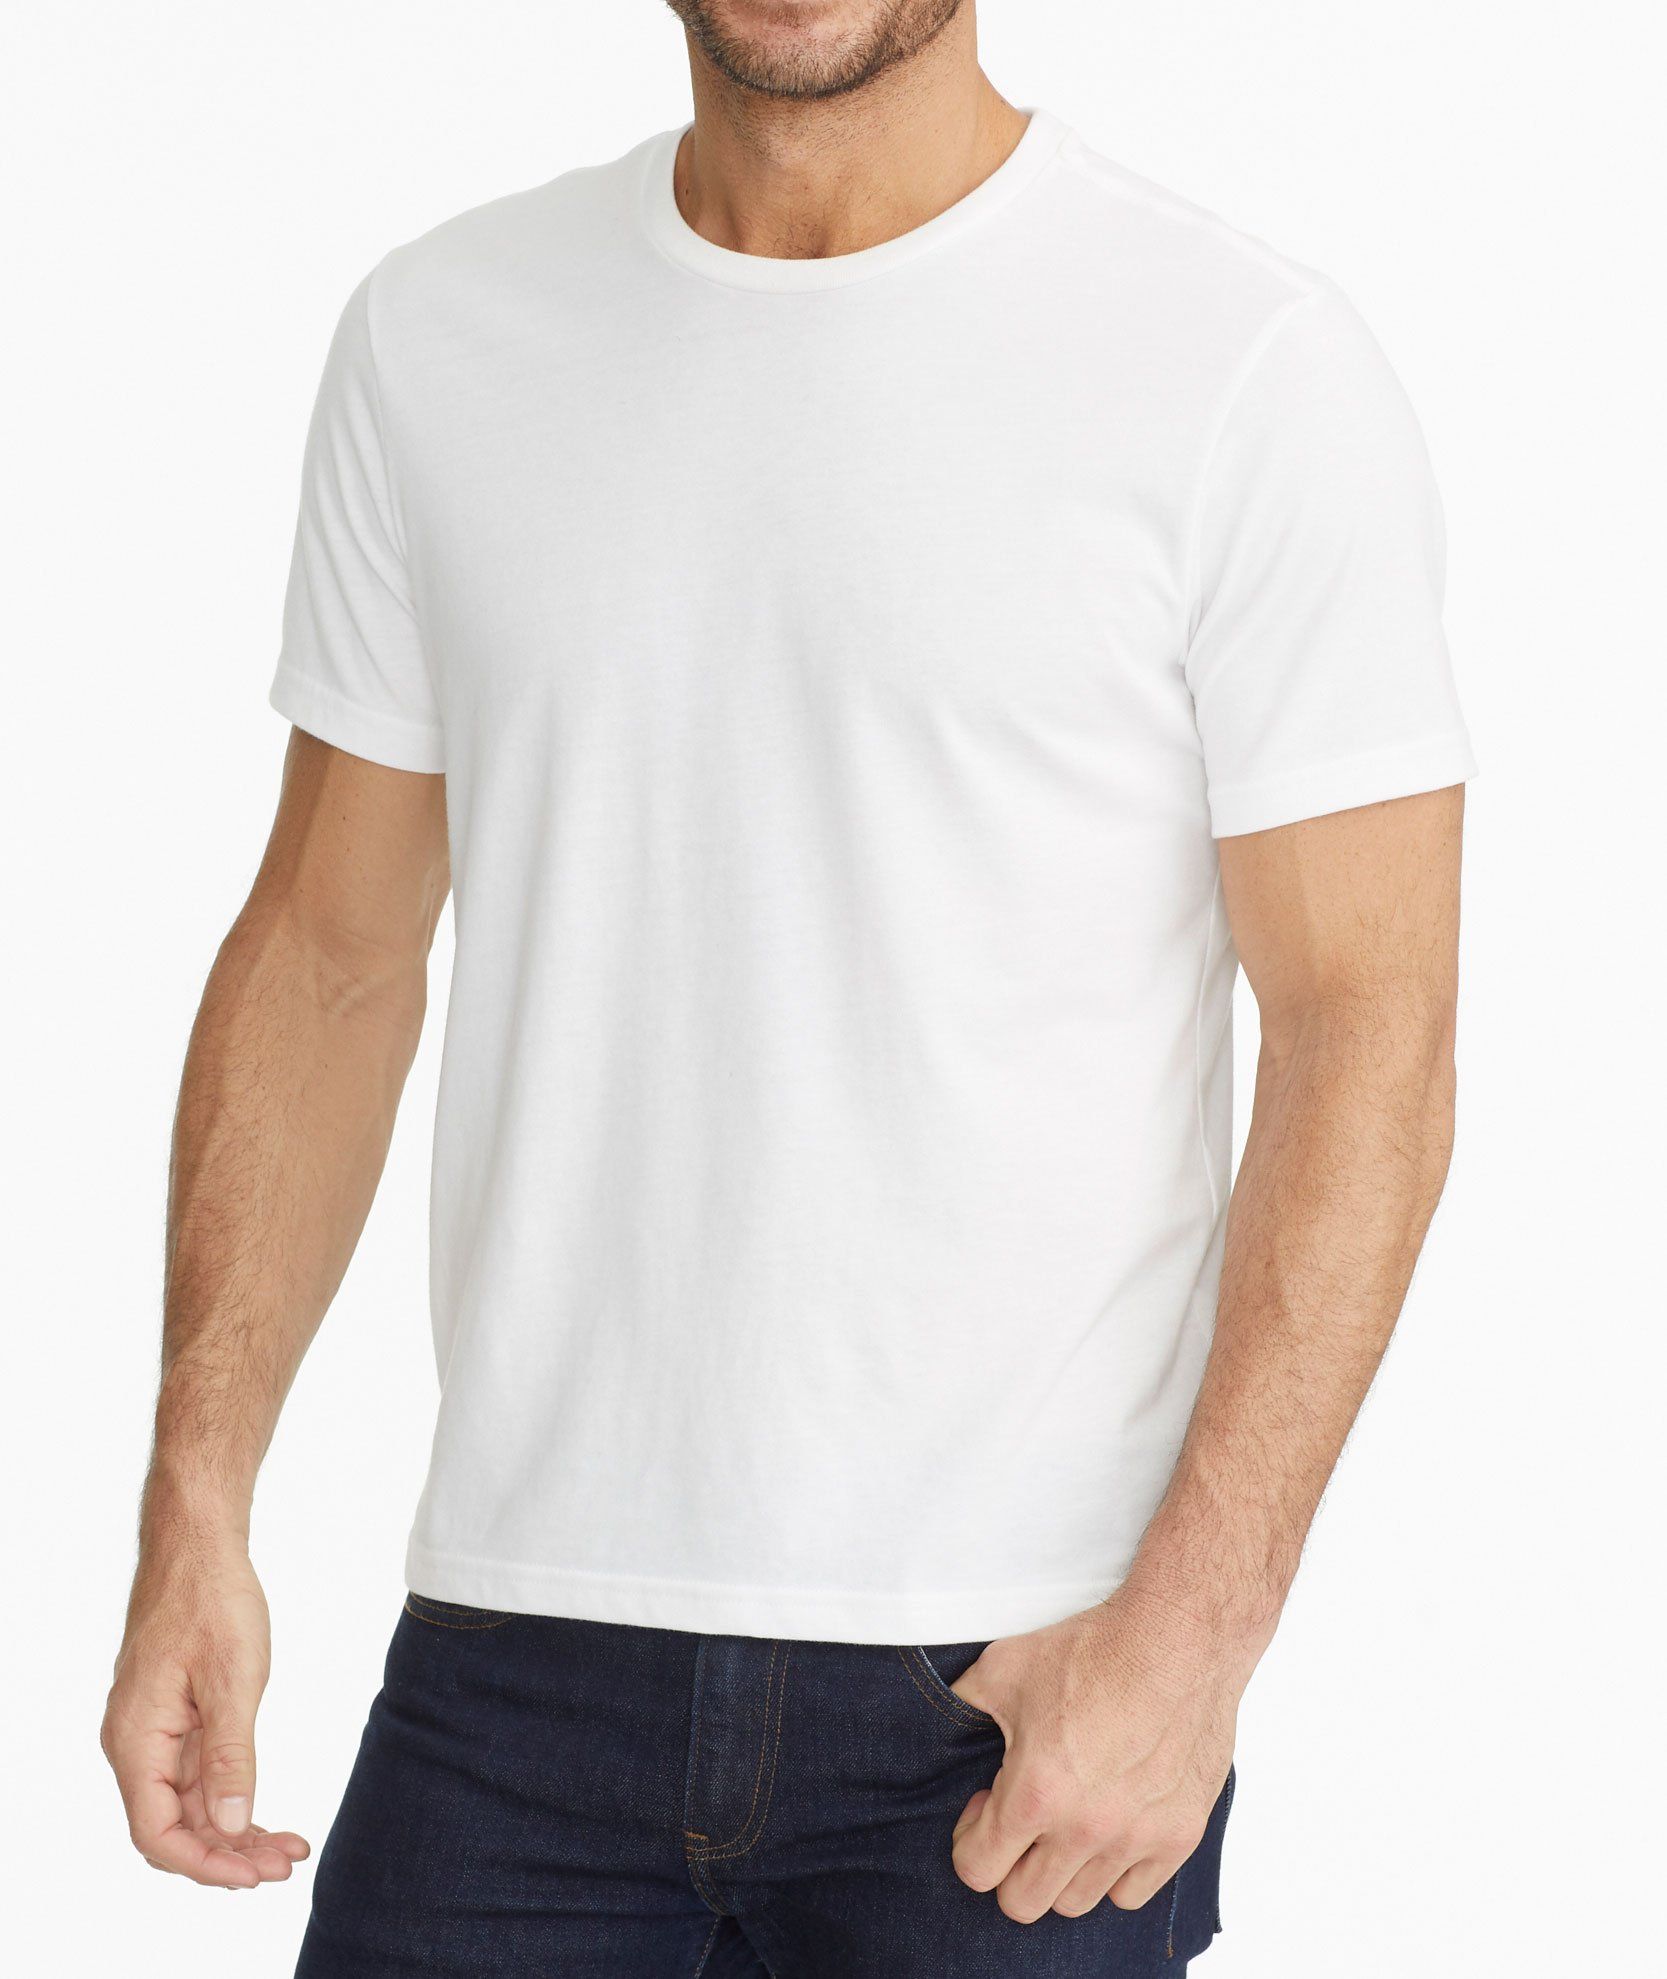 tee shirt white